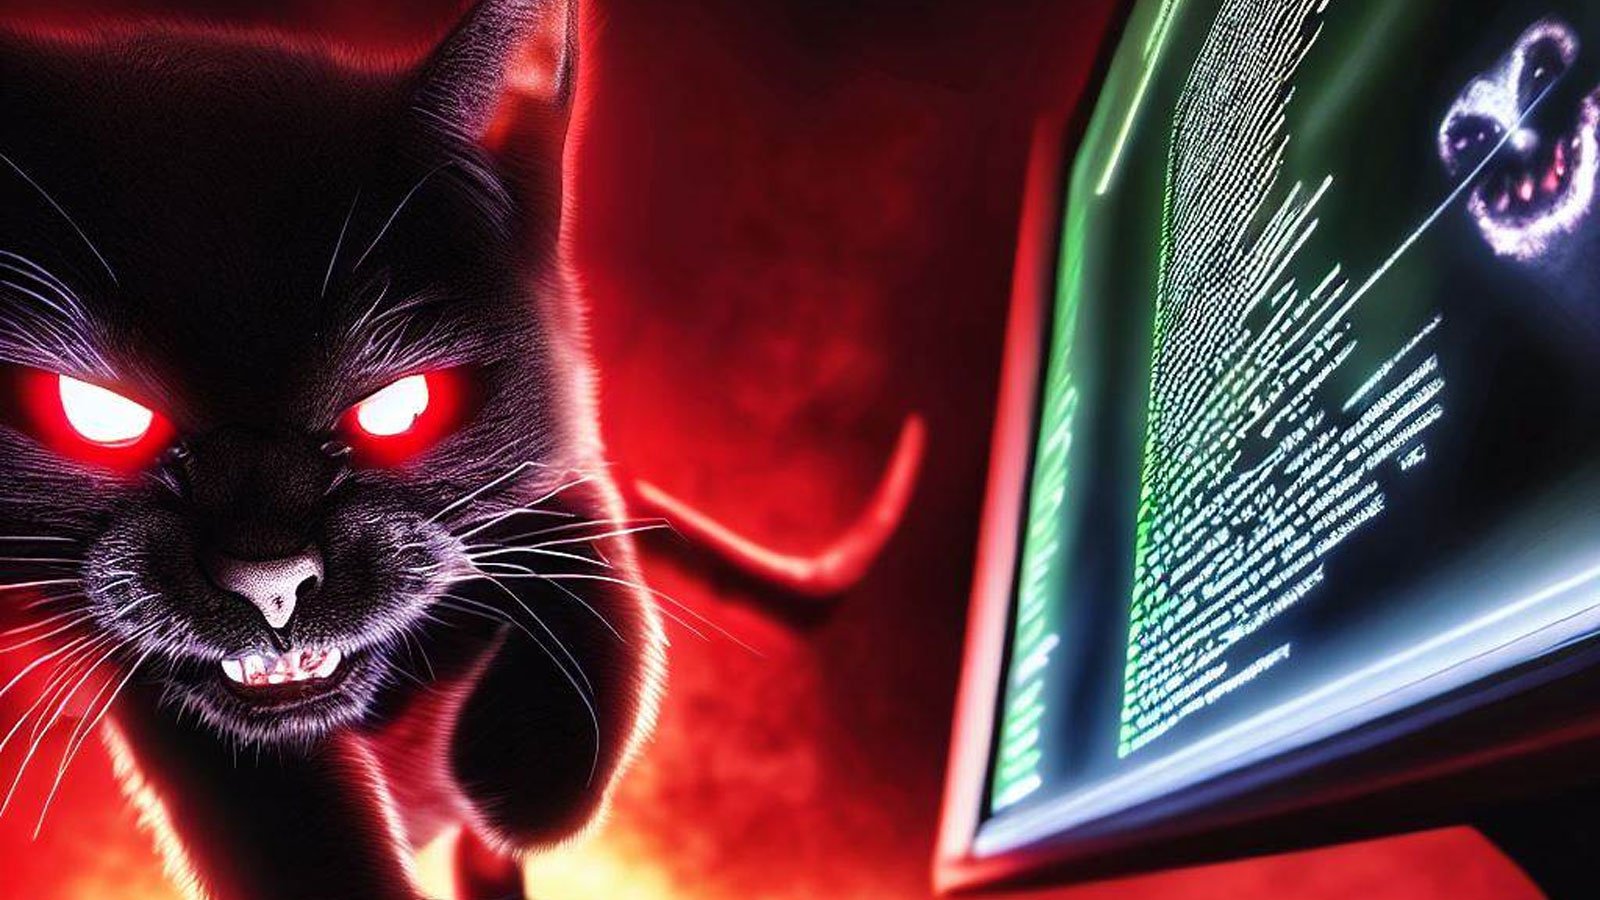 Blackcat ransomware